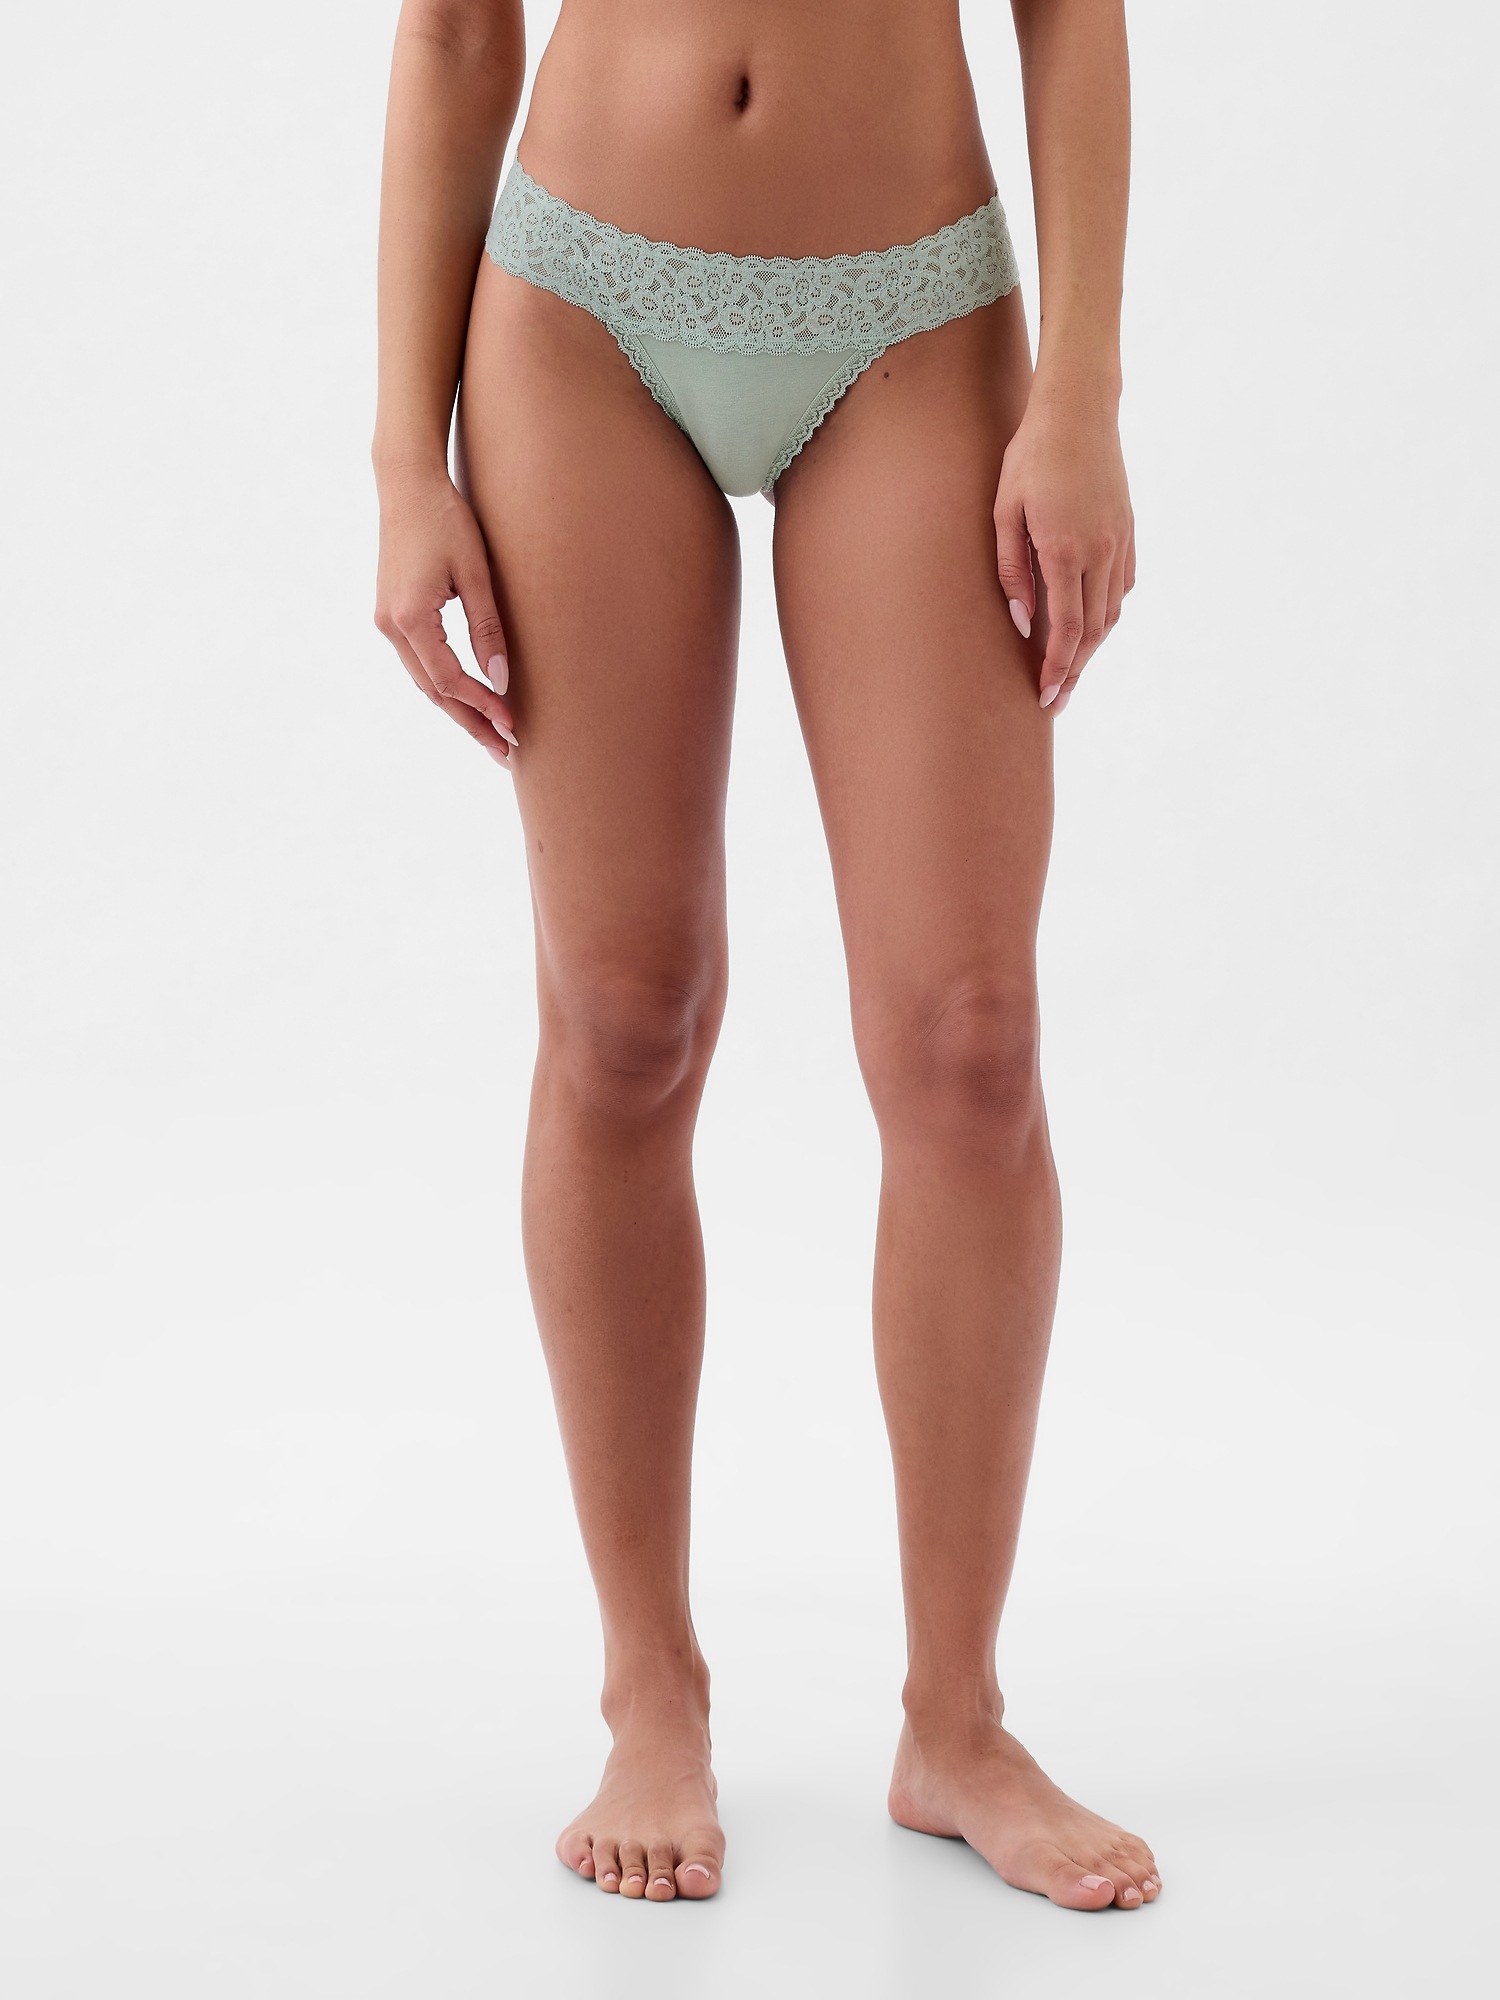 100PCS Women Sexy Lace Thong Women′ S Underwear Cotton Crotch